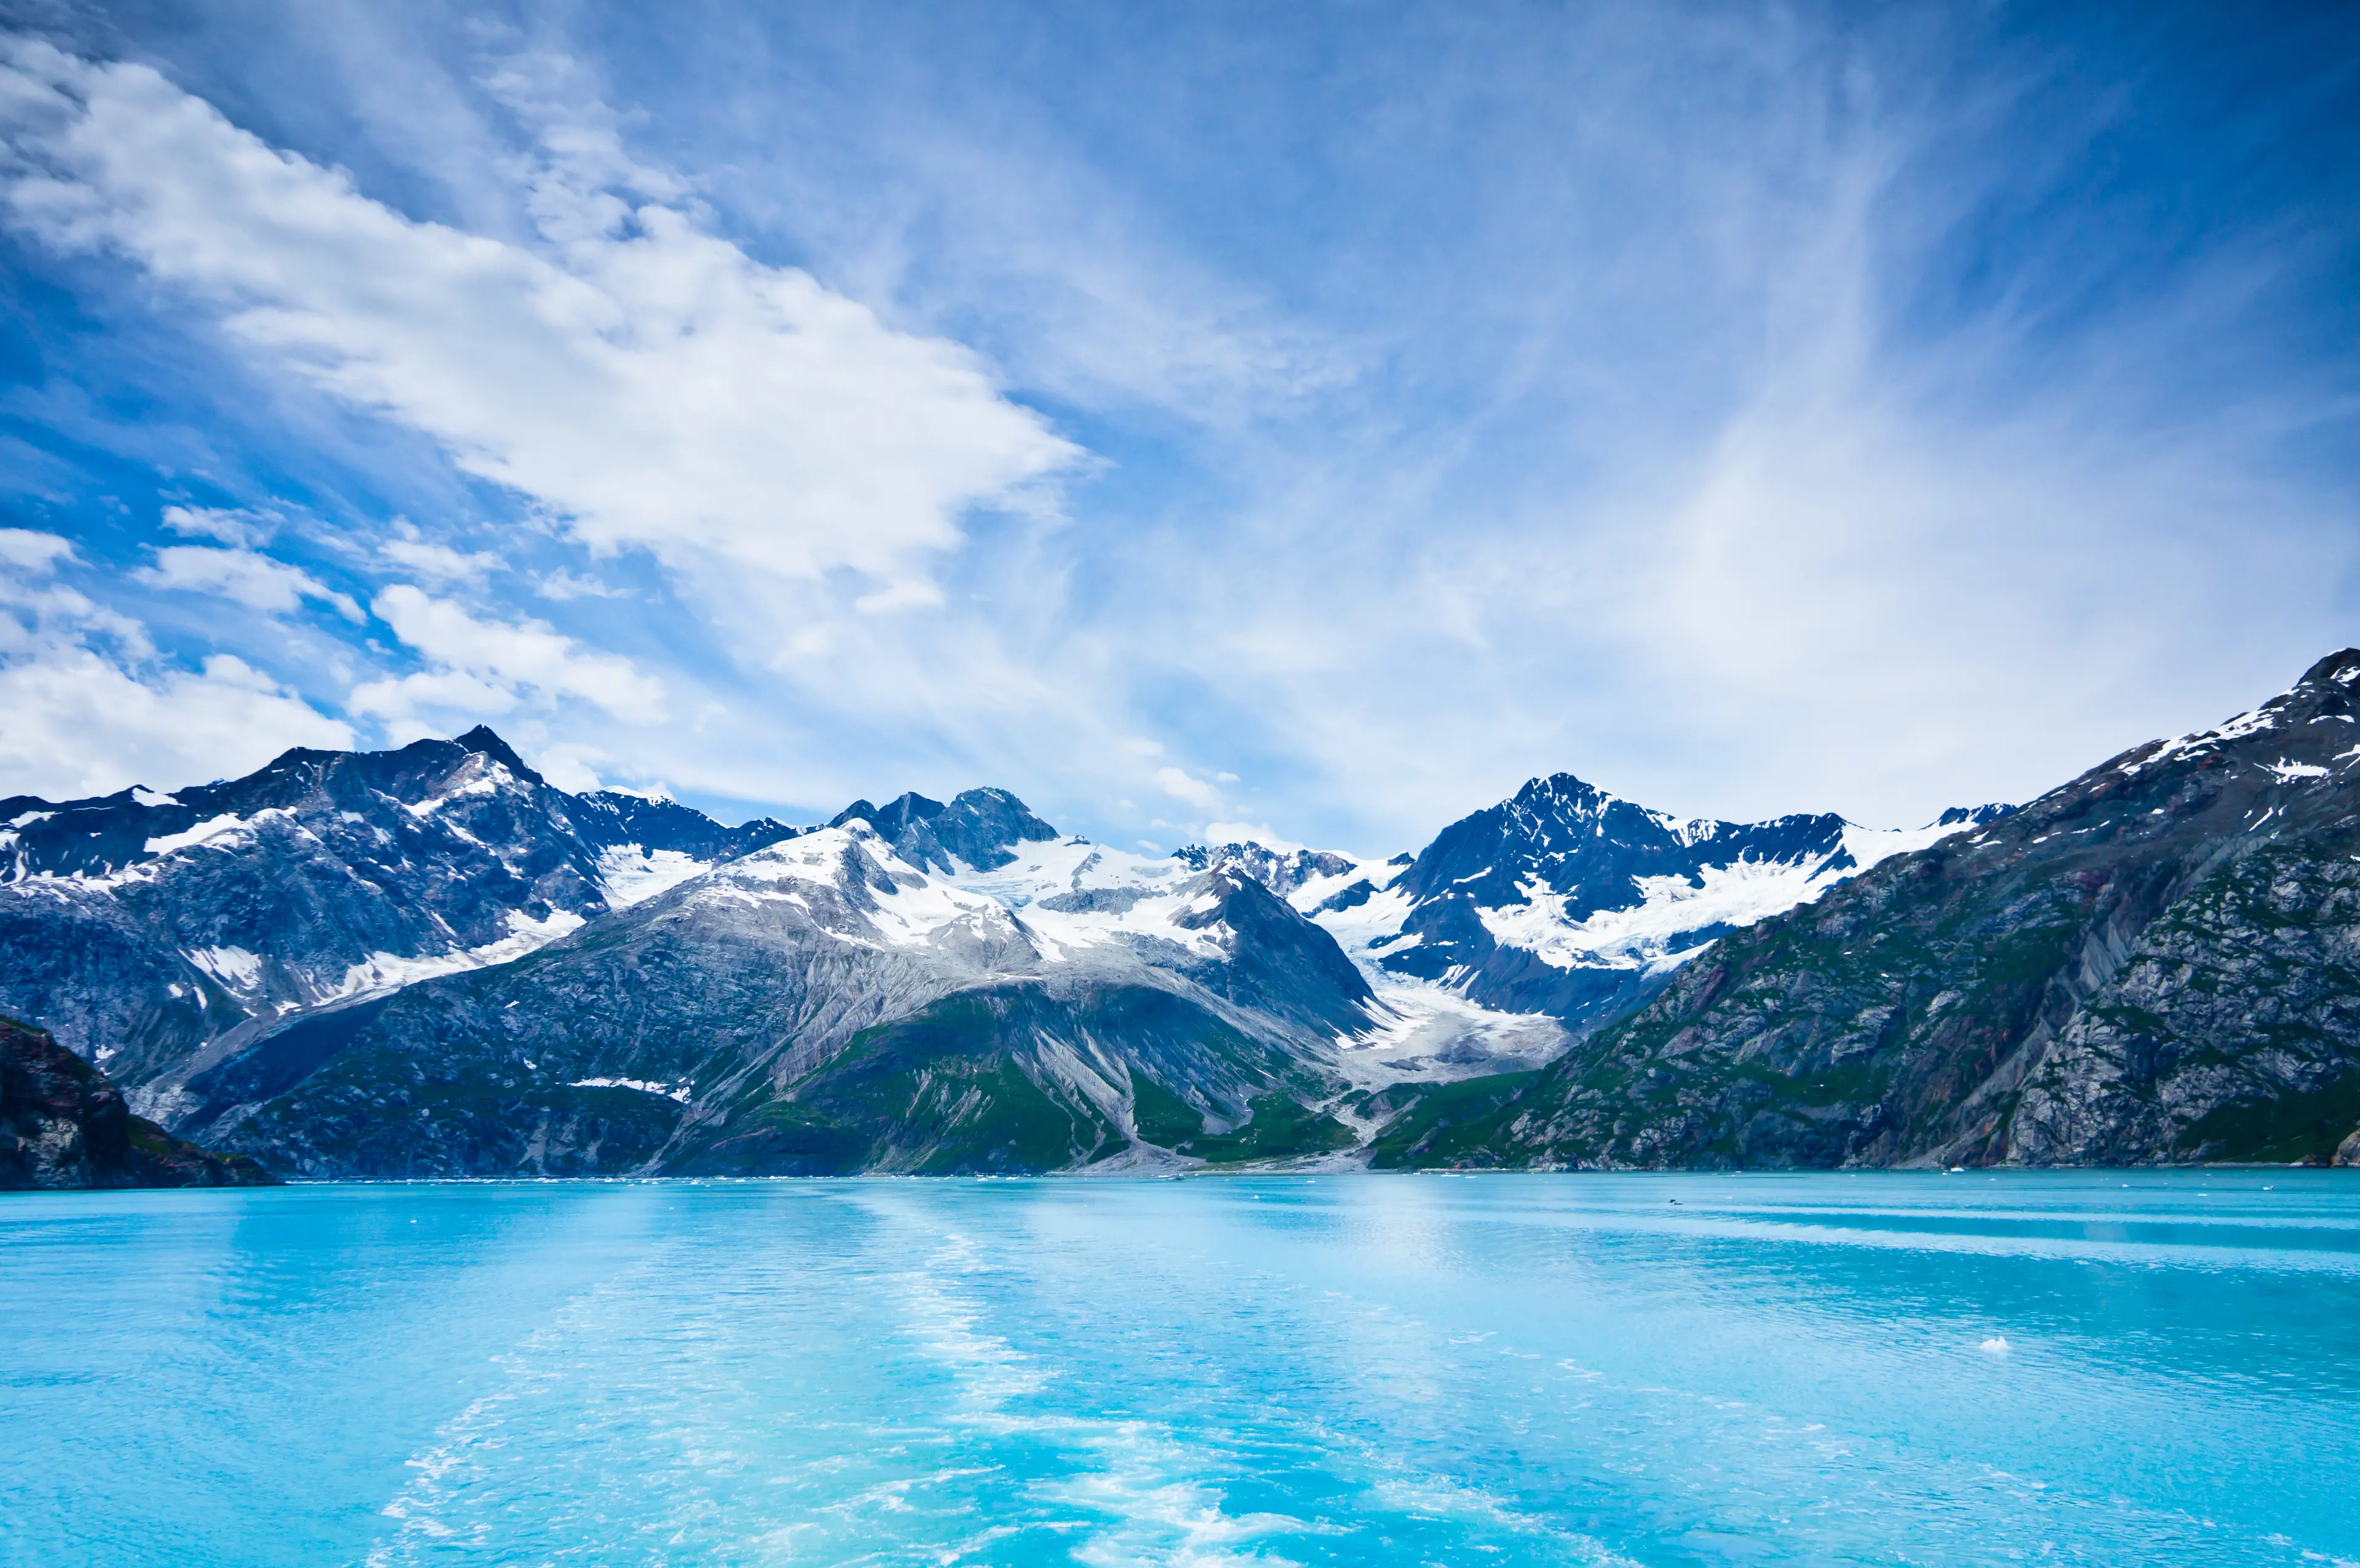 Glacier bay with mountainous background